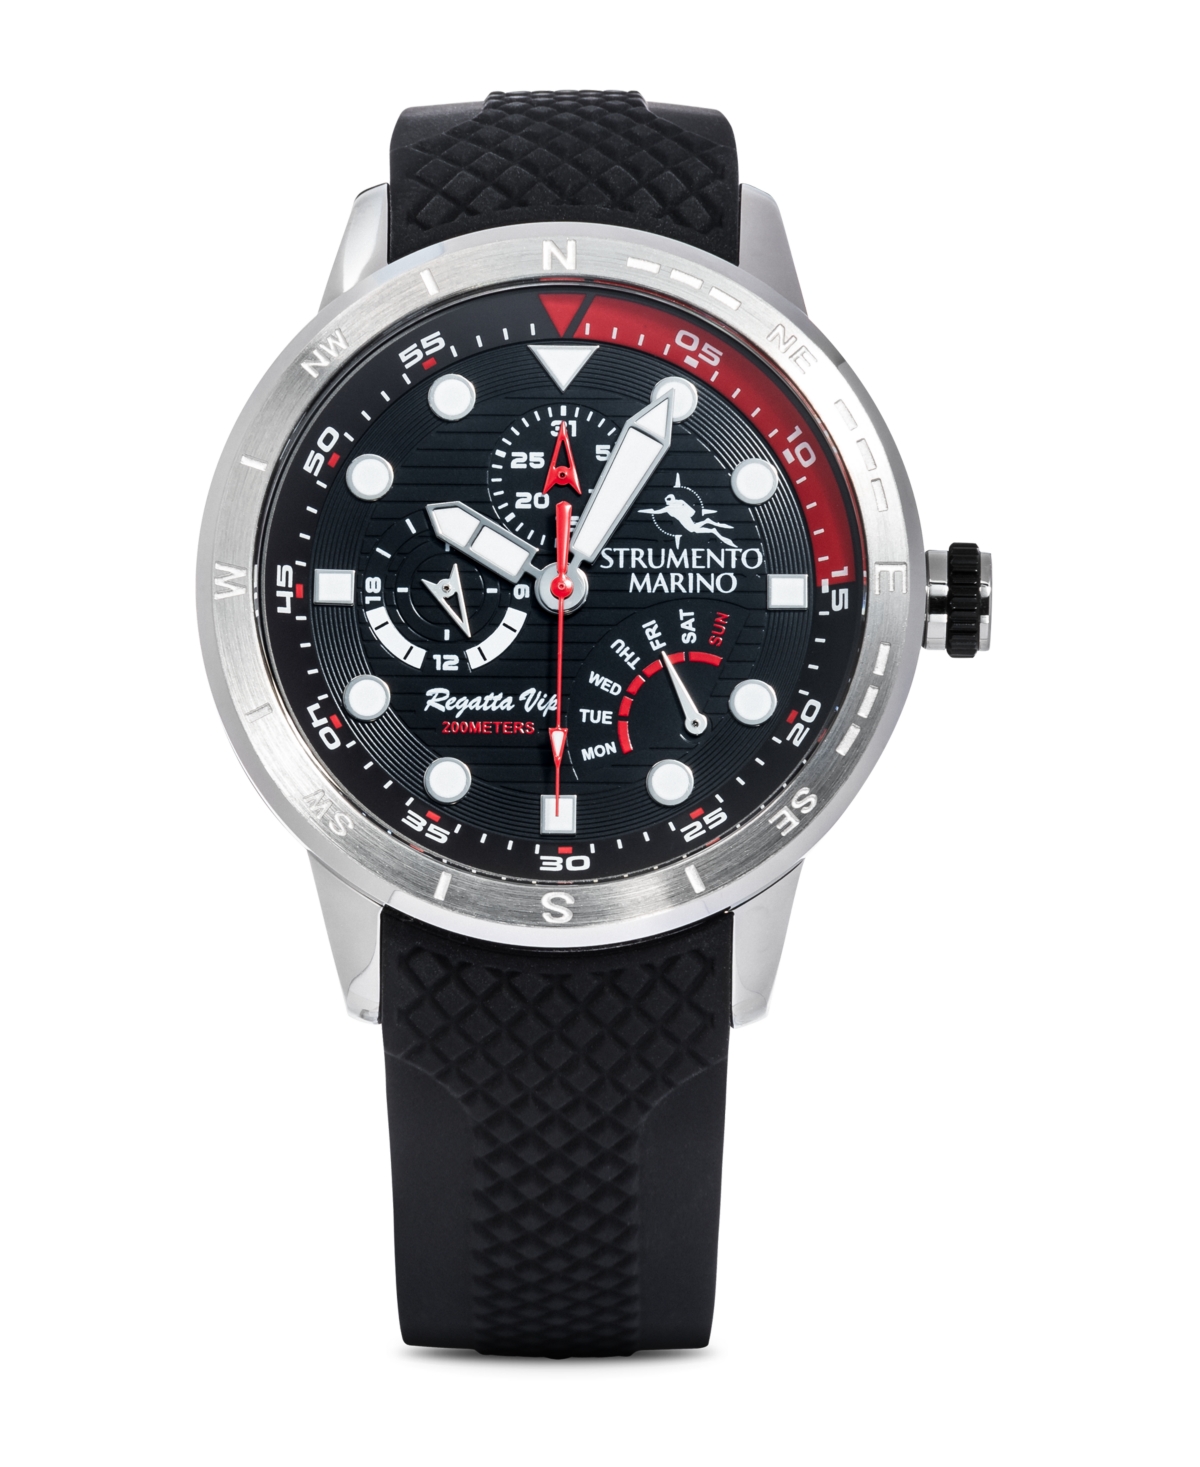 Men's Regatta Vip Day Retrograde Black Silicone Performance Timepiece Watch 46mm - Black